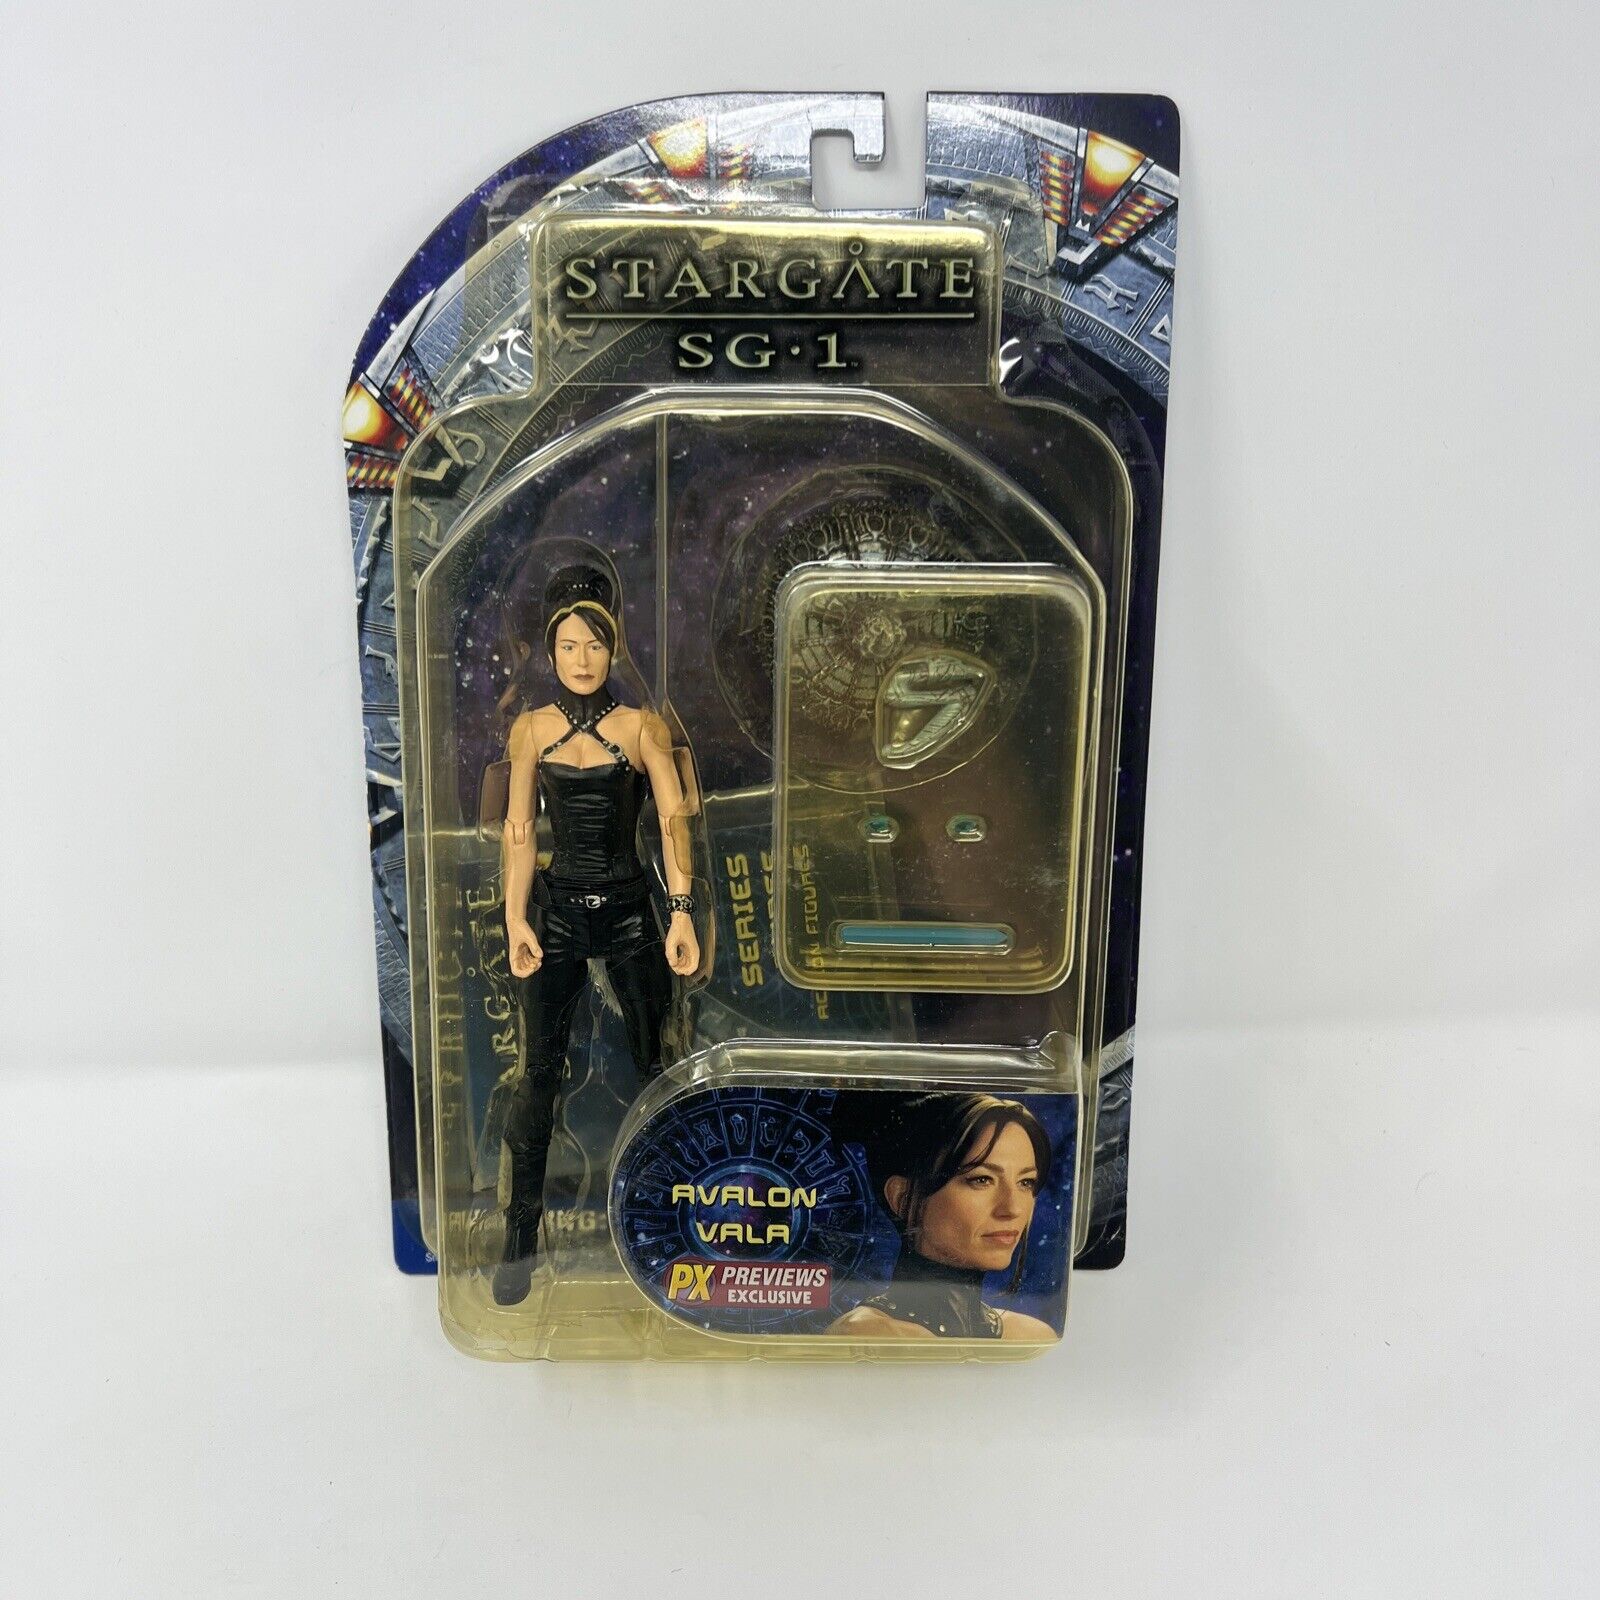 Stargate SG-1 Avalon Vala Exclusive Action Figure Diamond Select Toys New Read